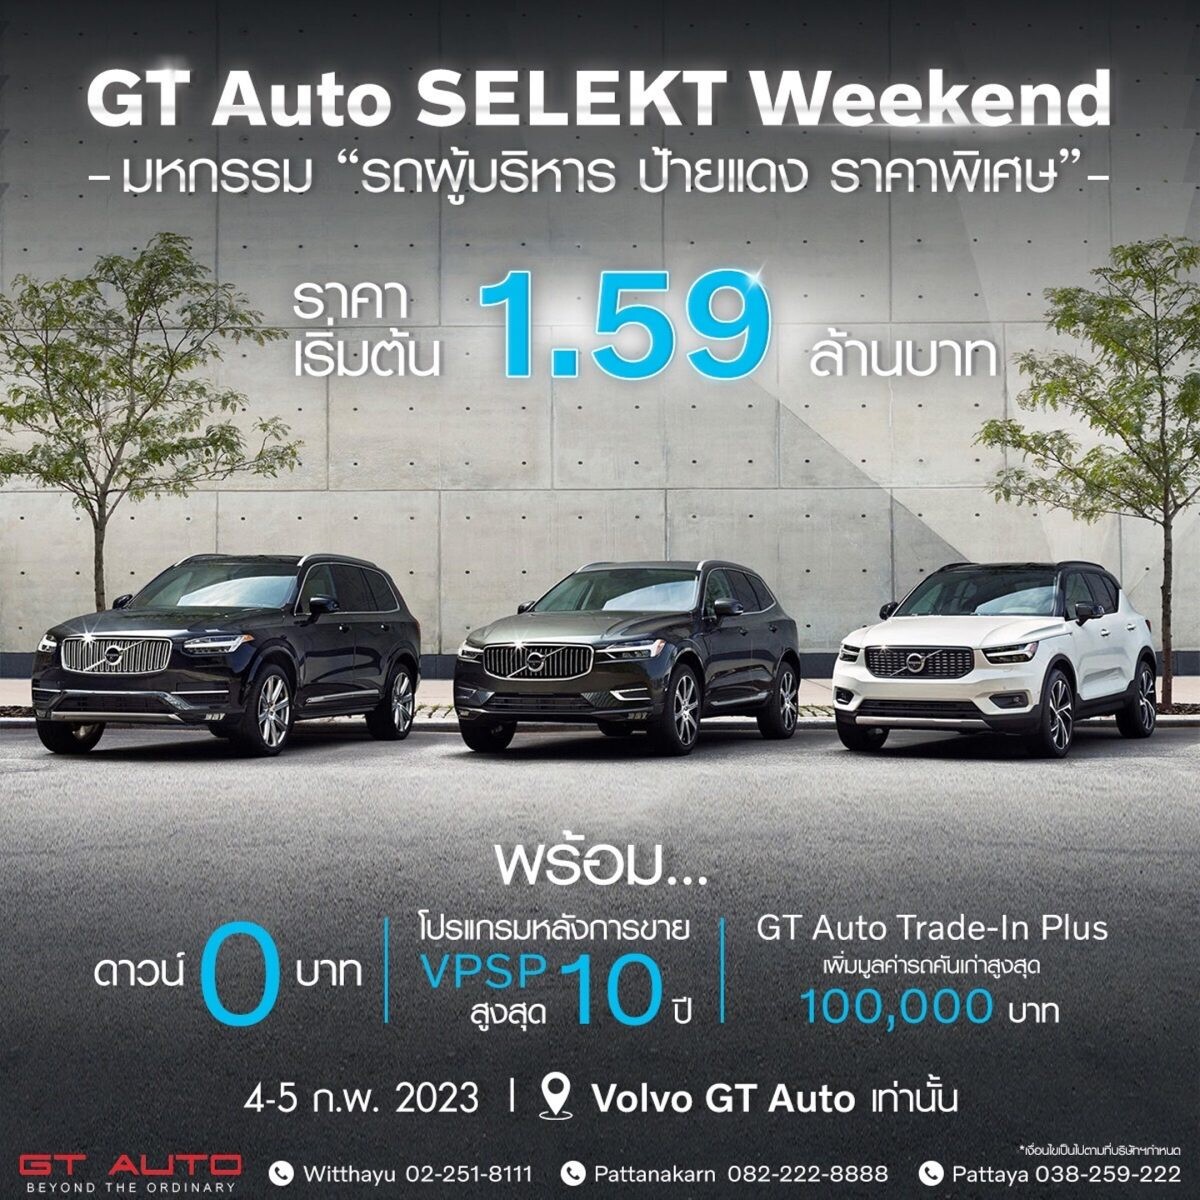 GT Auto จัดงาน "GT Auto SELEKT WEEKEND มหกรรม รถผู้บริหาร Volvo ป้ายแดง ไมล์น้อย ราคาพิเศษ" สุดยิ่งใหญ่